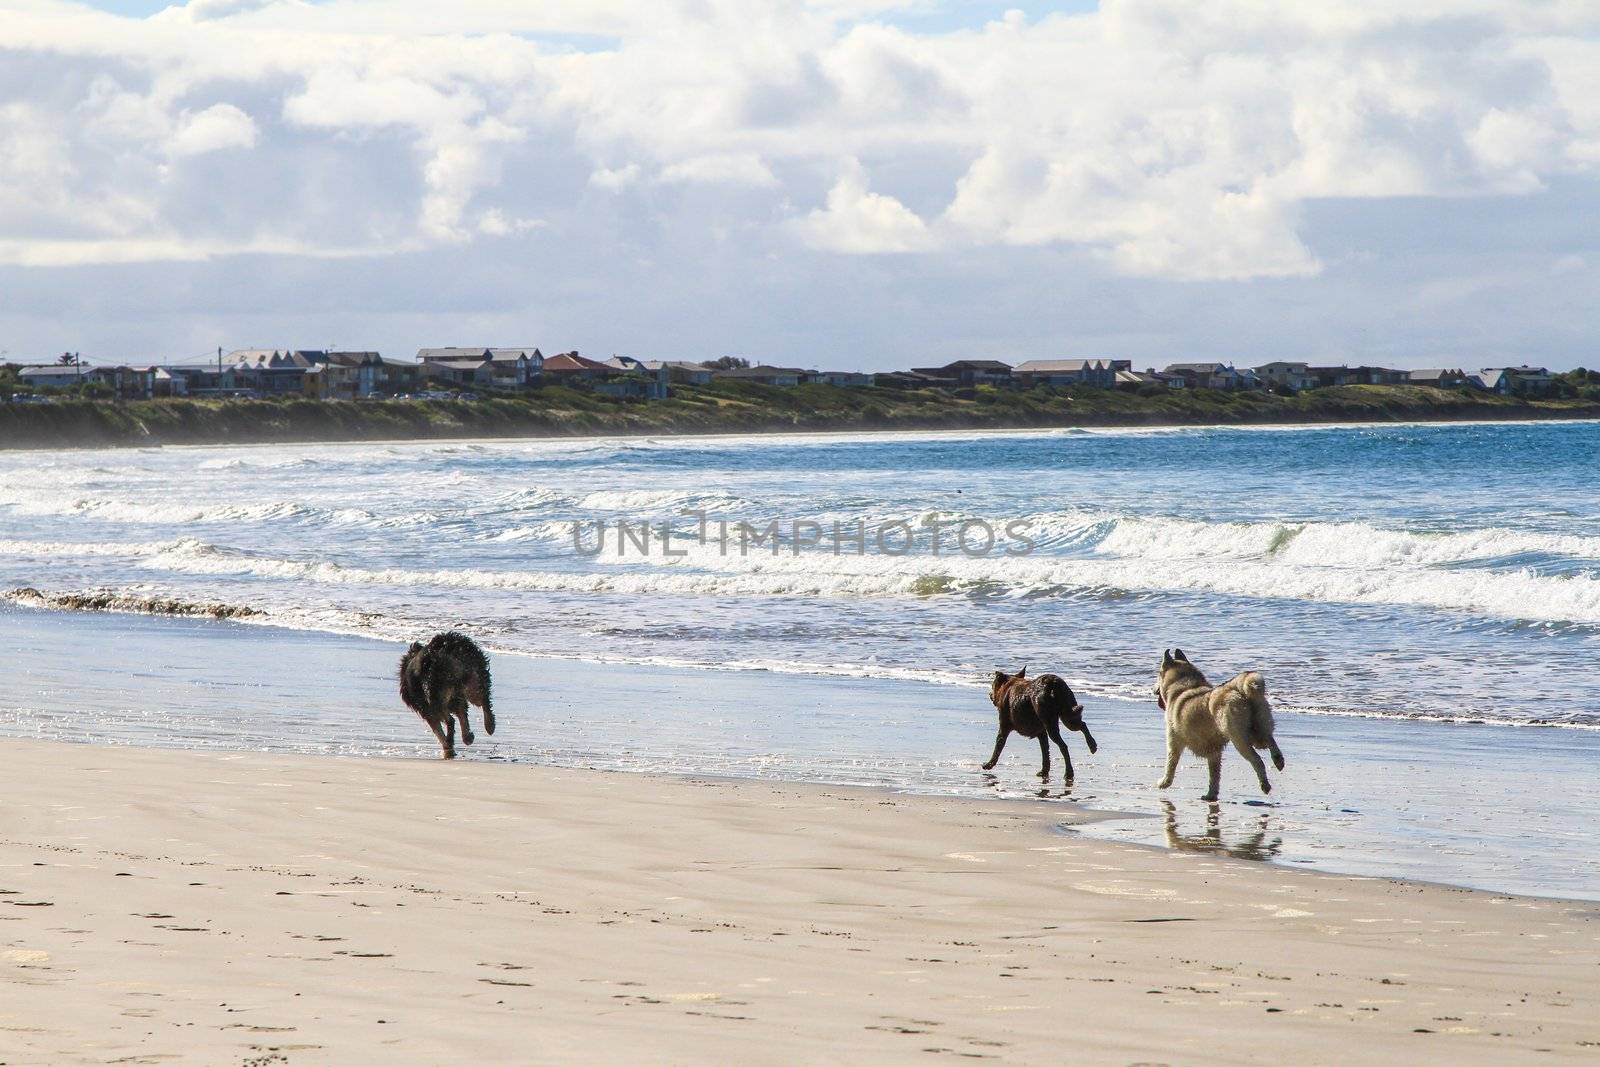 Dogs run on sandy beach chase each other near water edge.